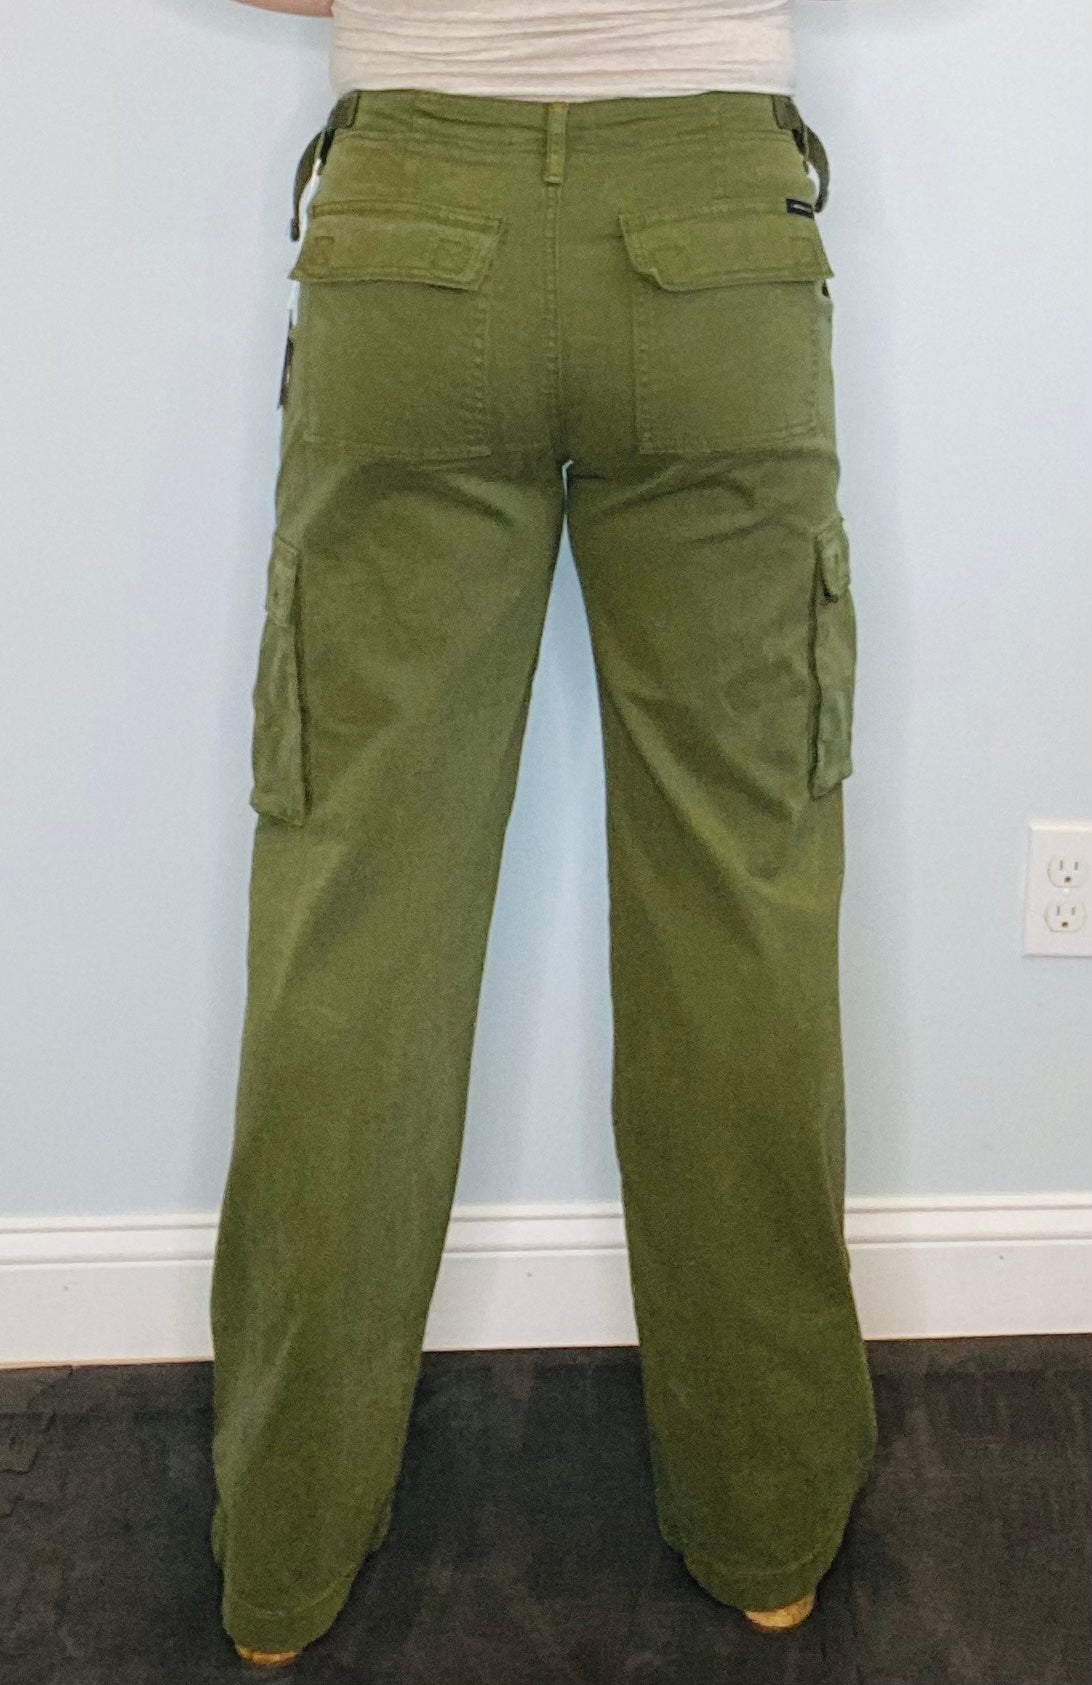 Mossy Green Cargo Pants